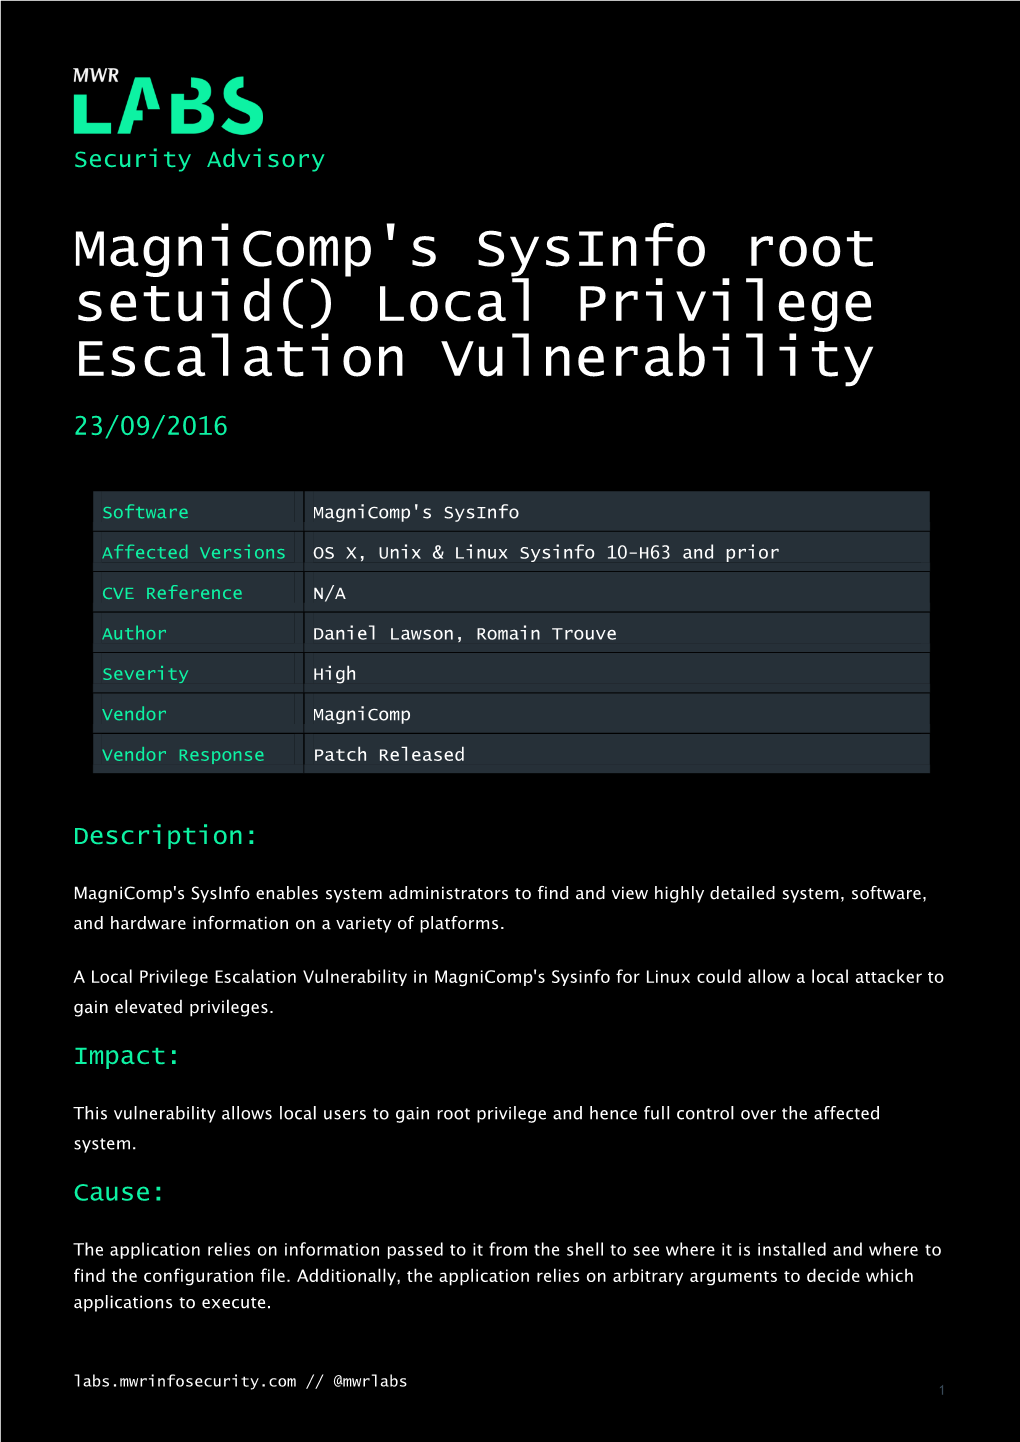 Magnicomp's Sysinfo Root Setuid() Local Privilege Escalation Vulnerability